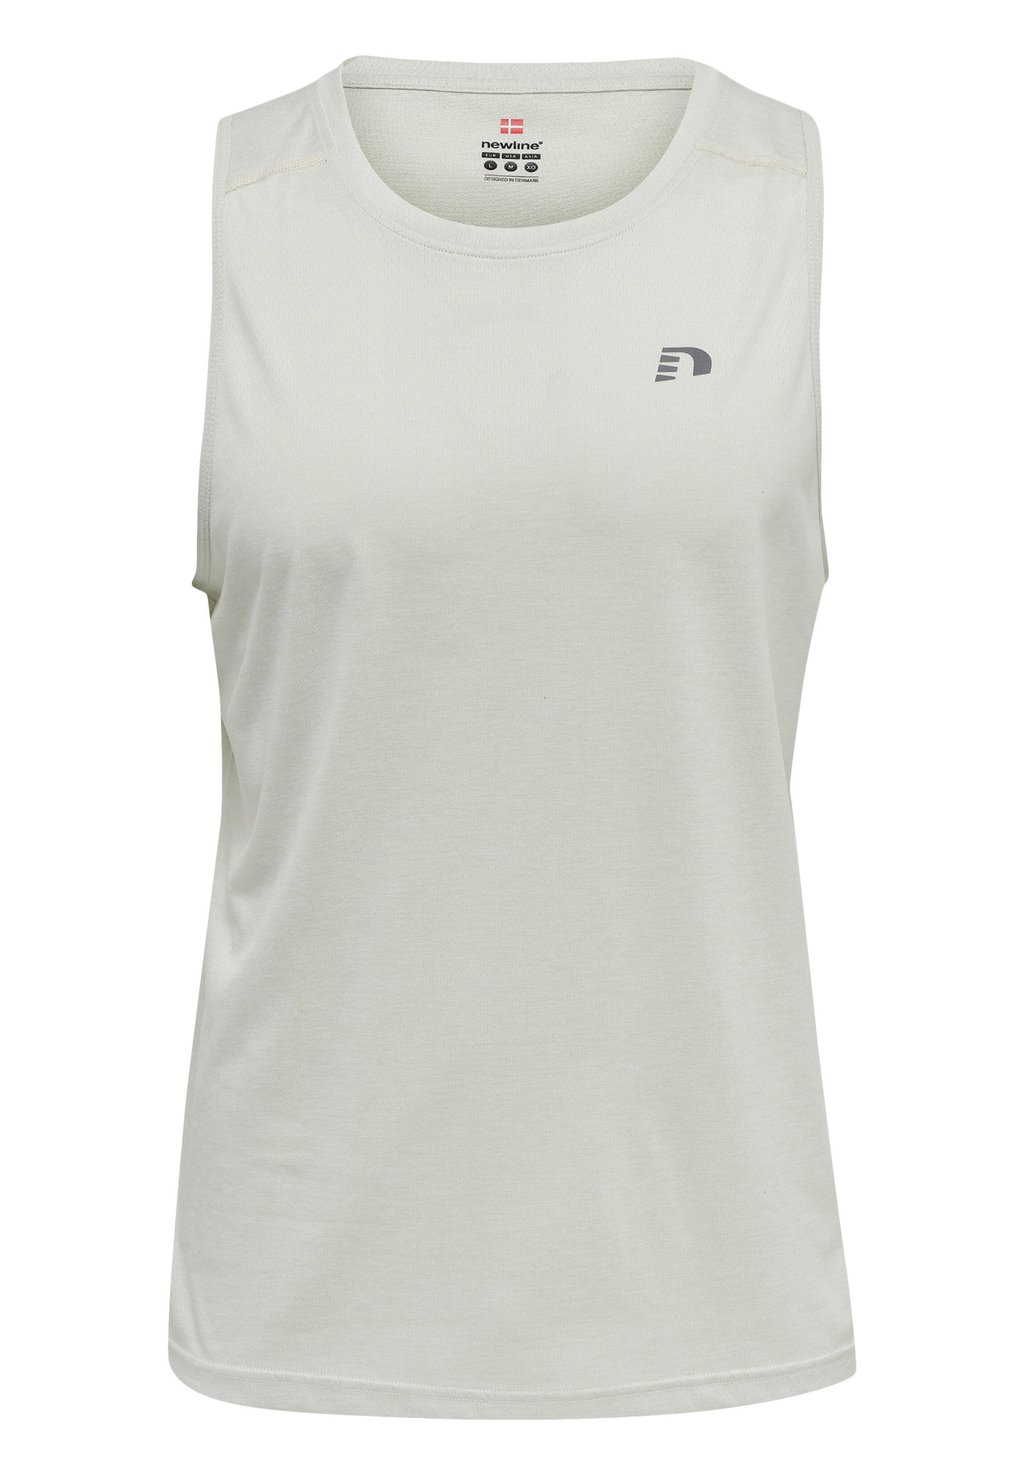 Спортивная футболка Newline, светло-серый